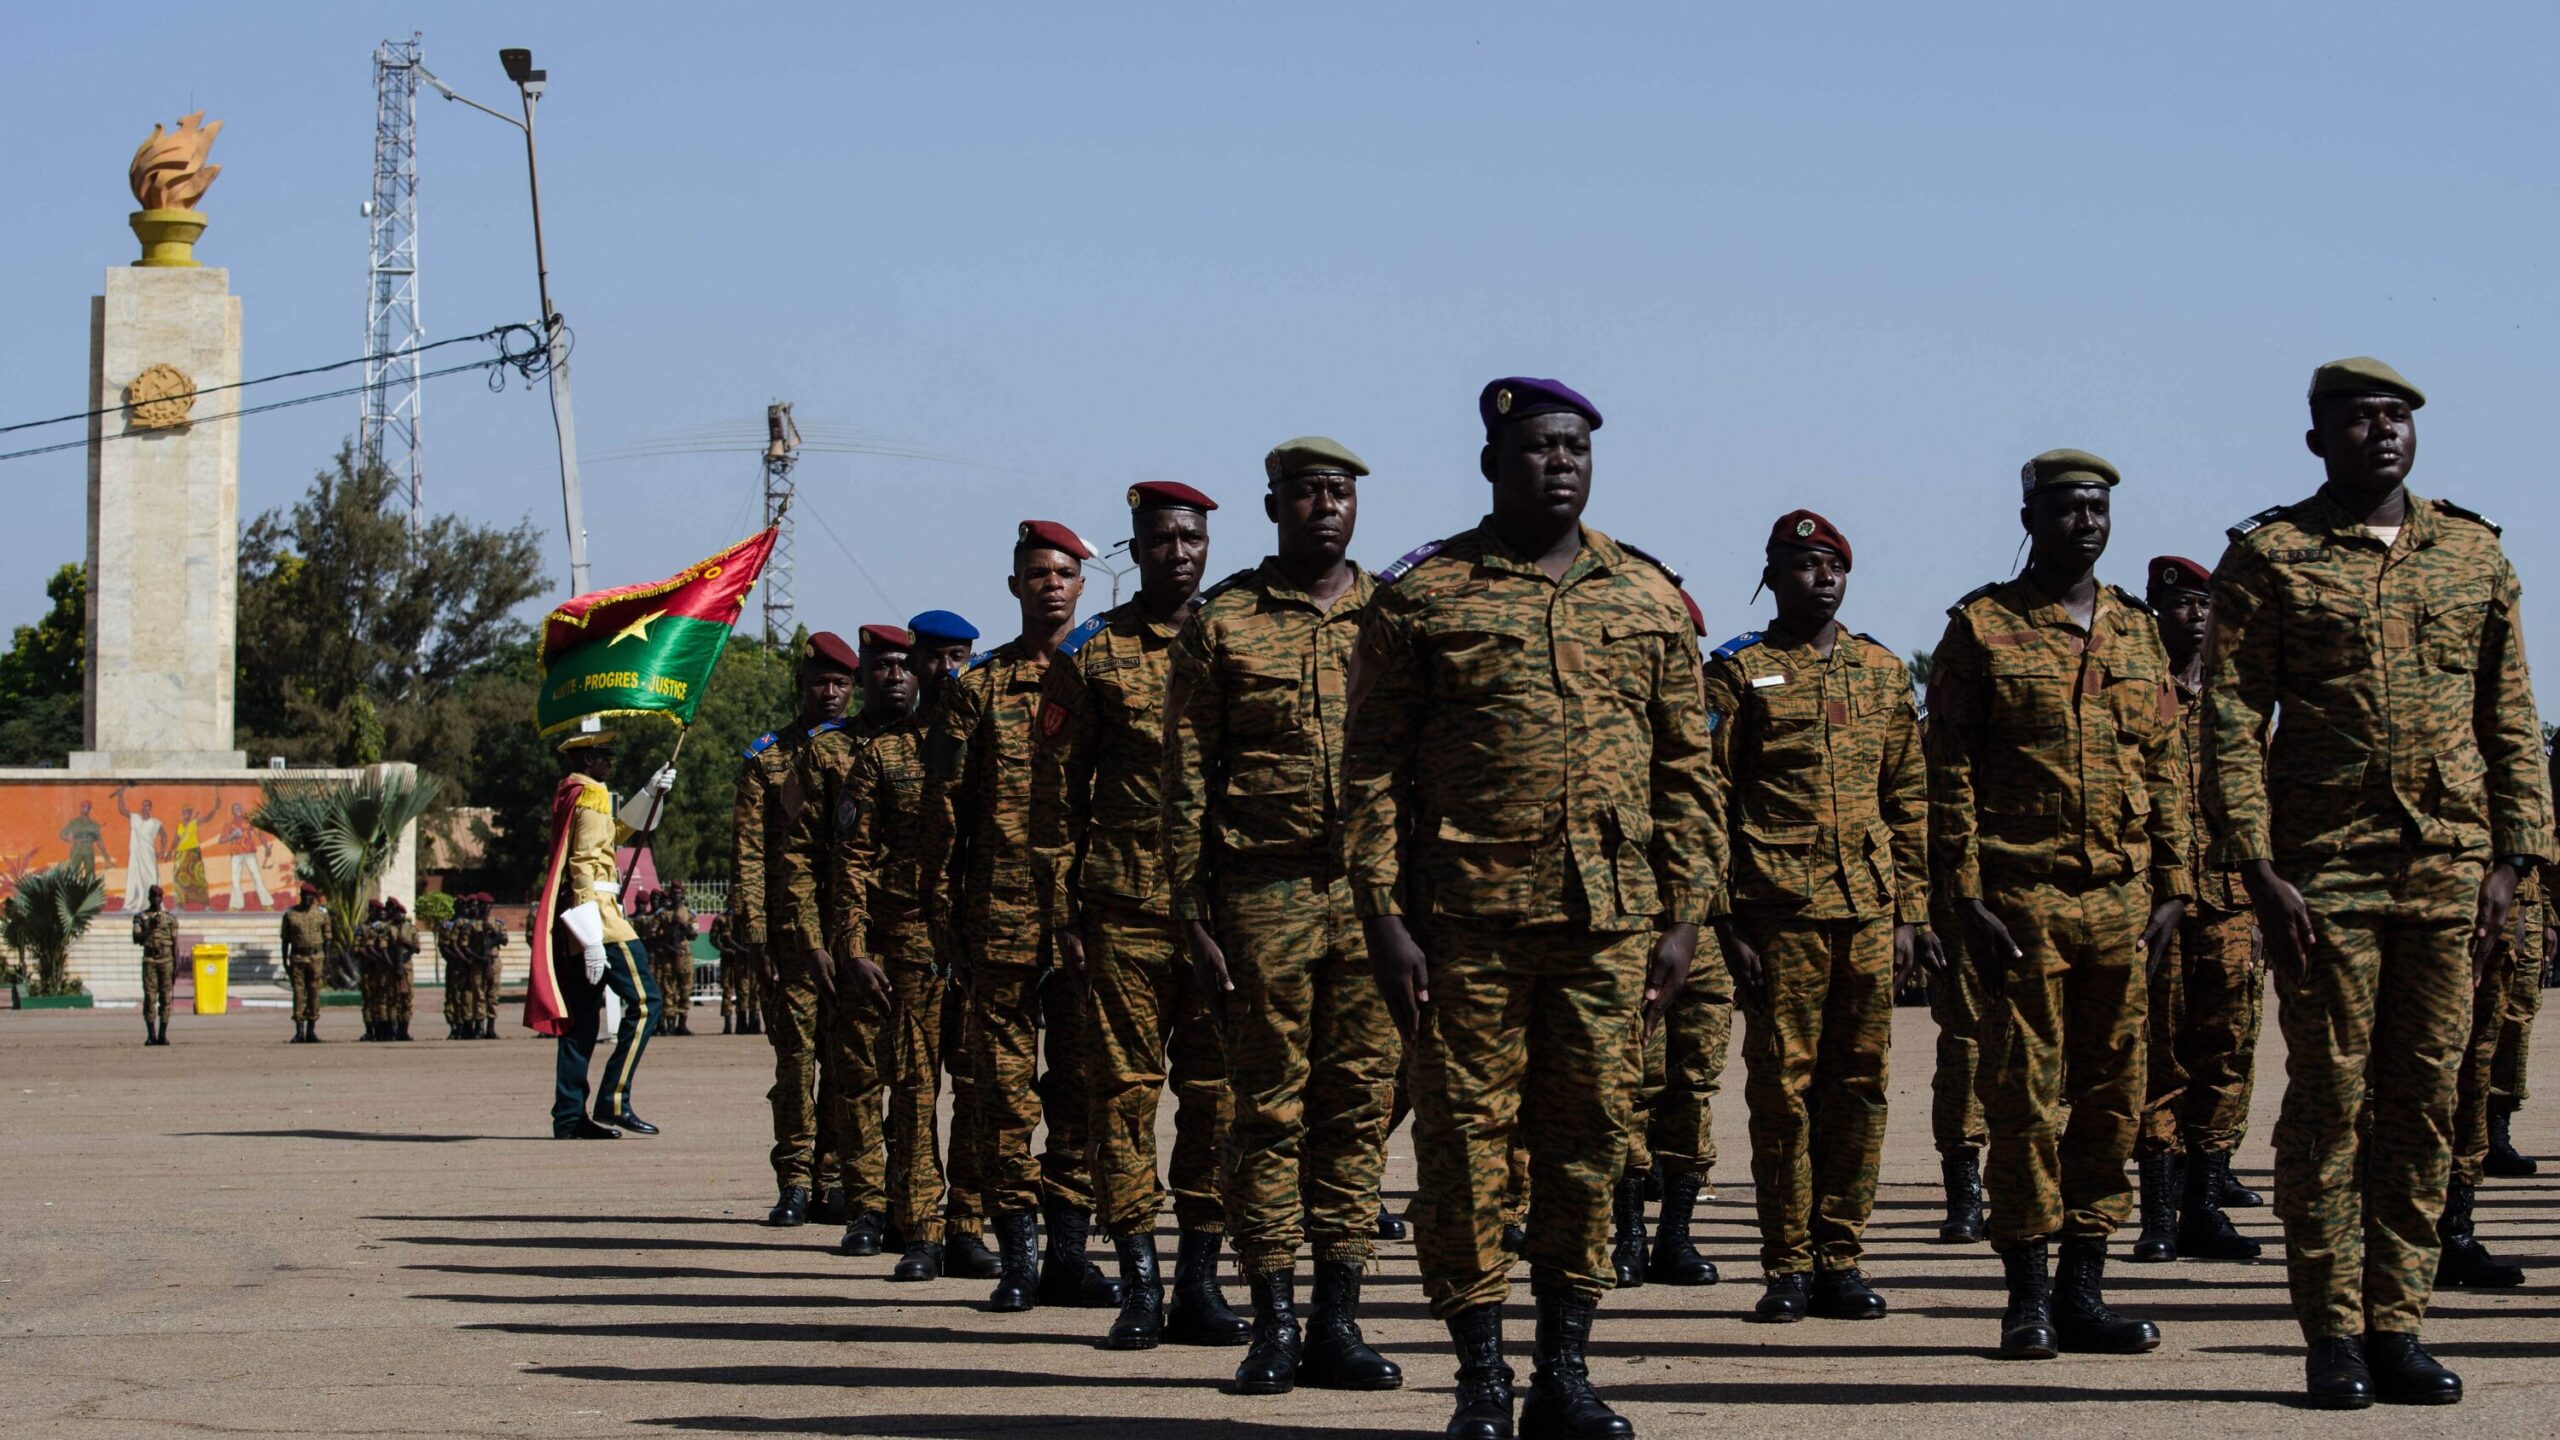 Burkina Faso military denies involvement in mutilation video